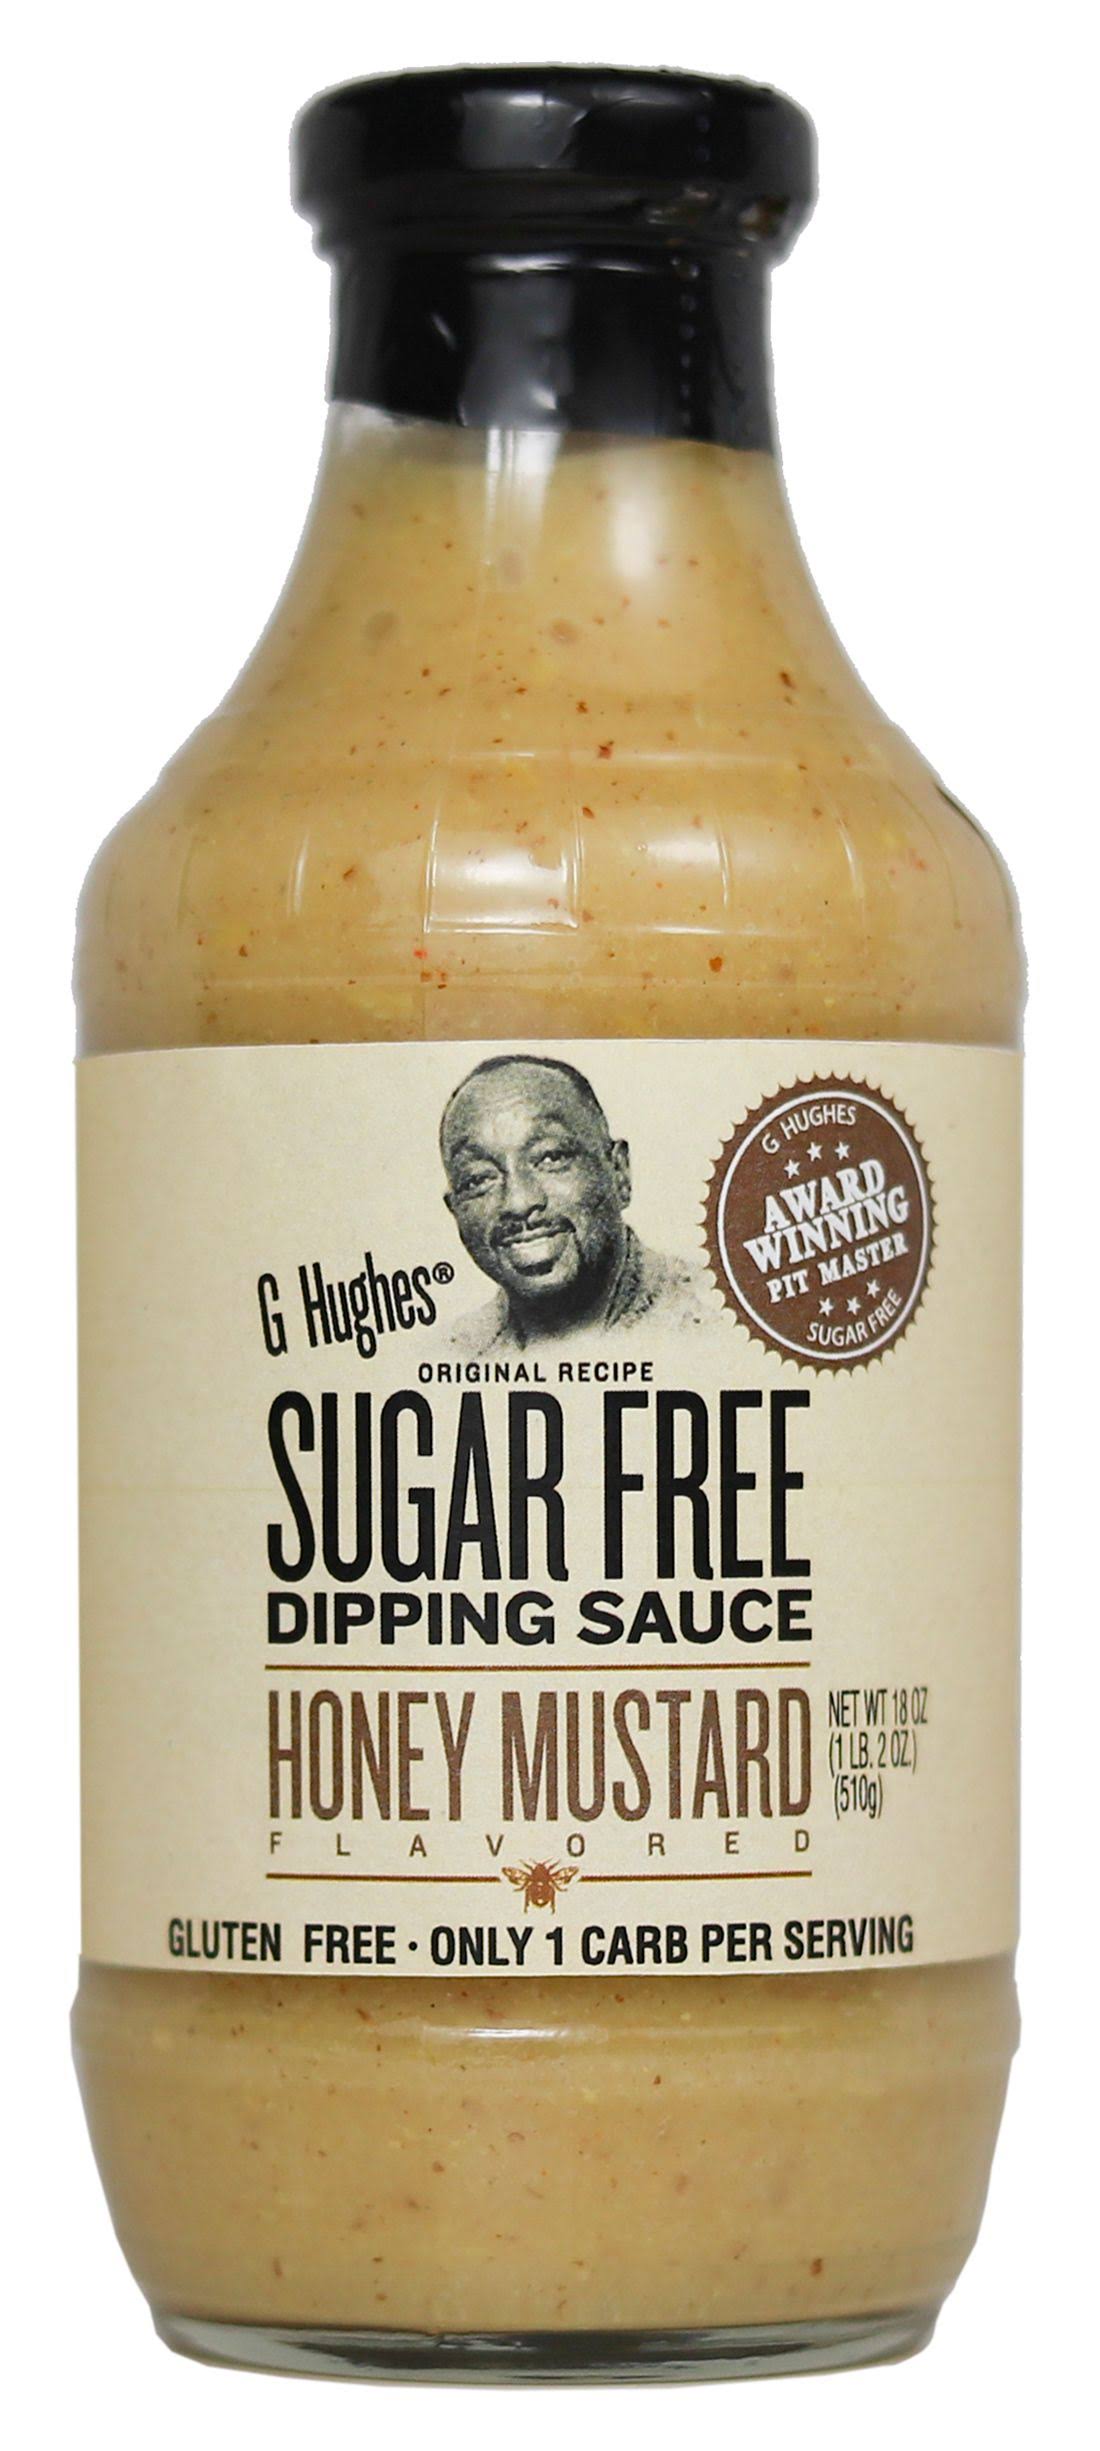 G Hughes Honey Mustard Sugar Free Dipping Sauce, 18 oz.